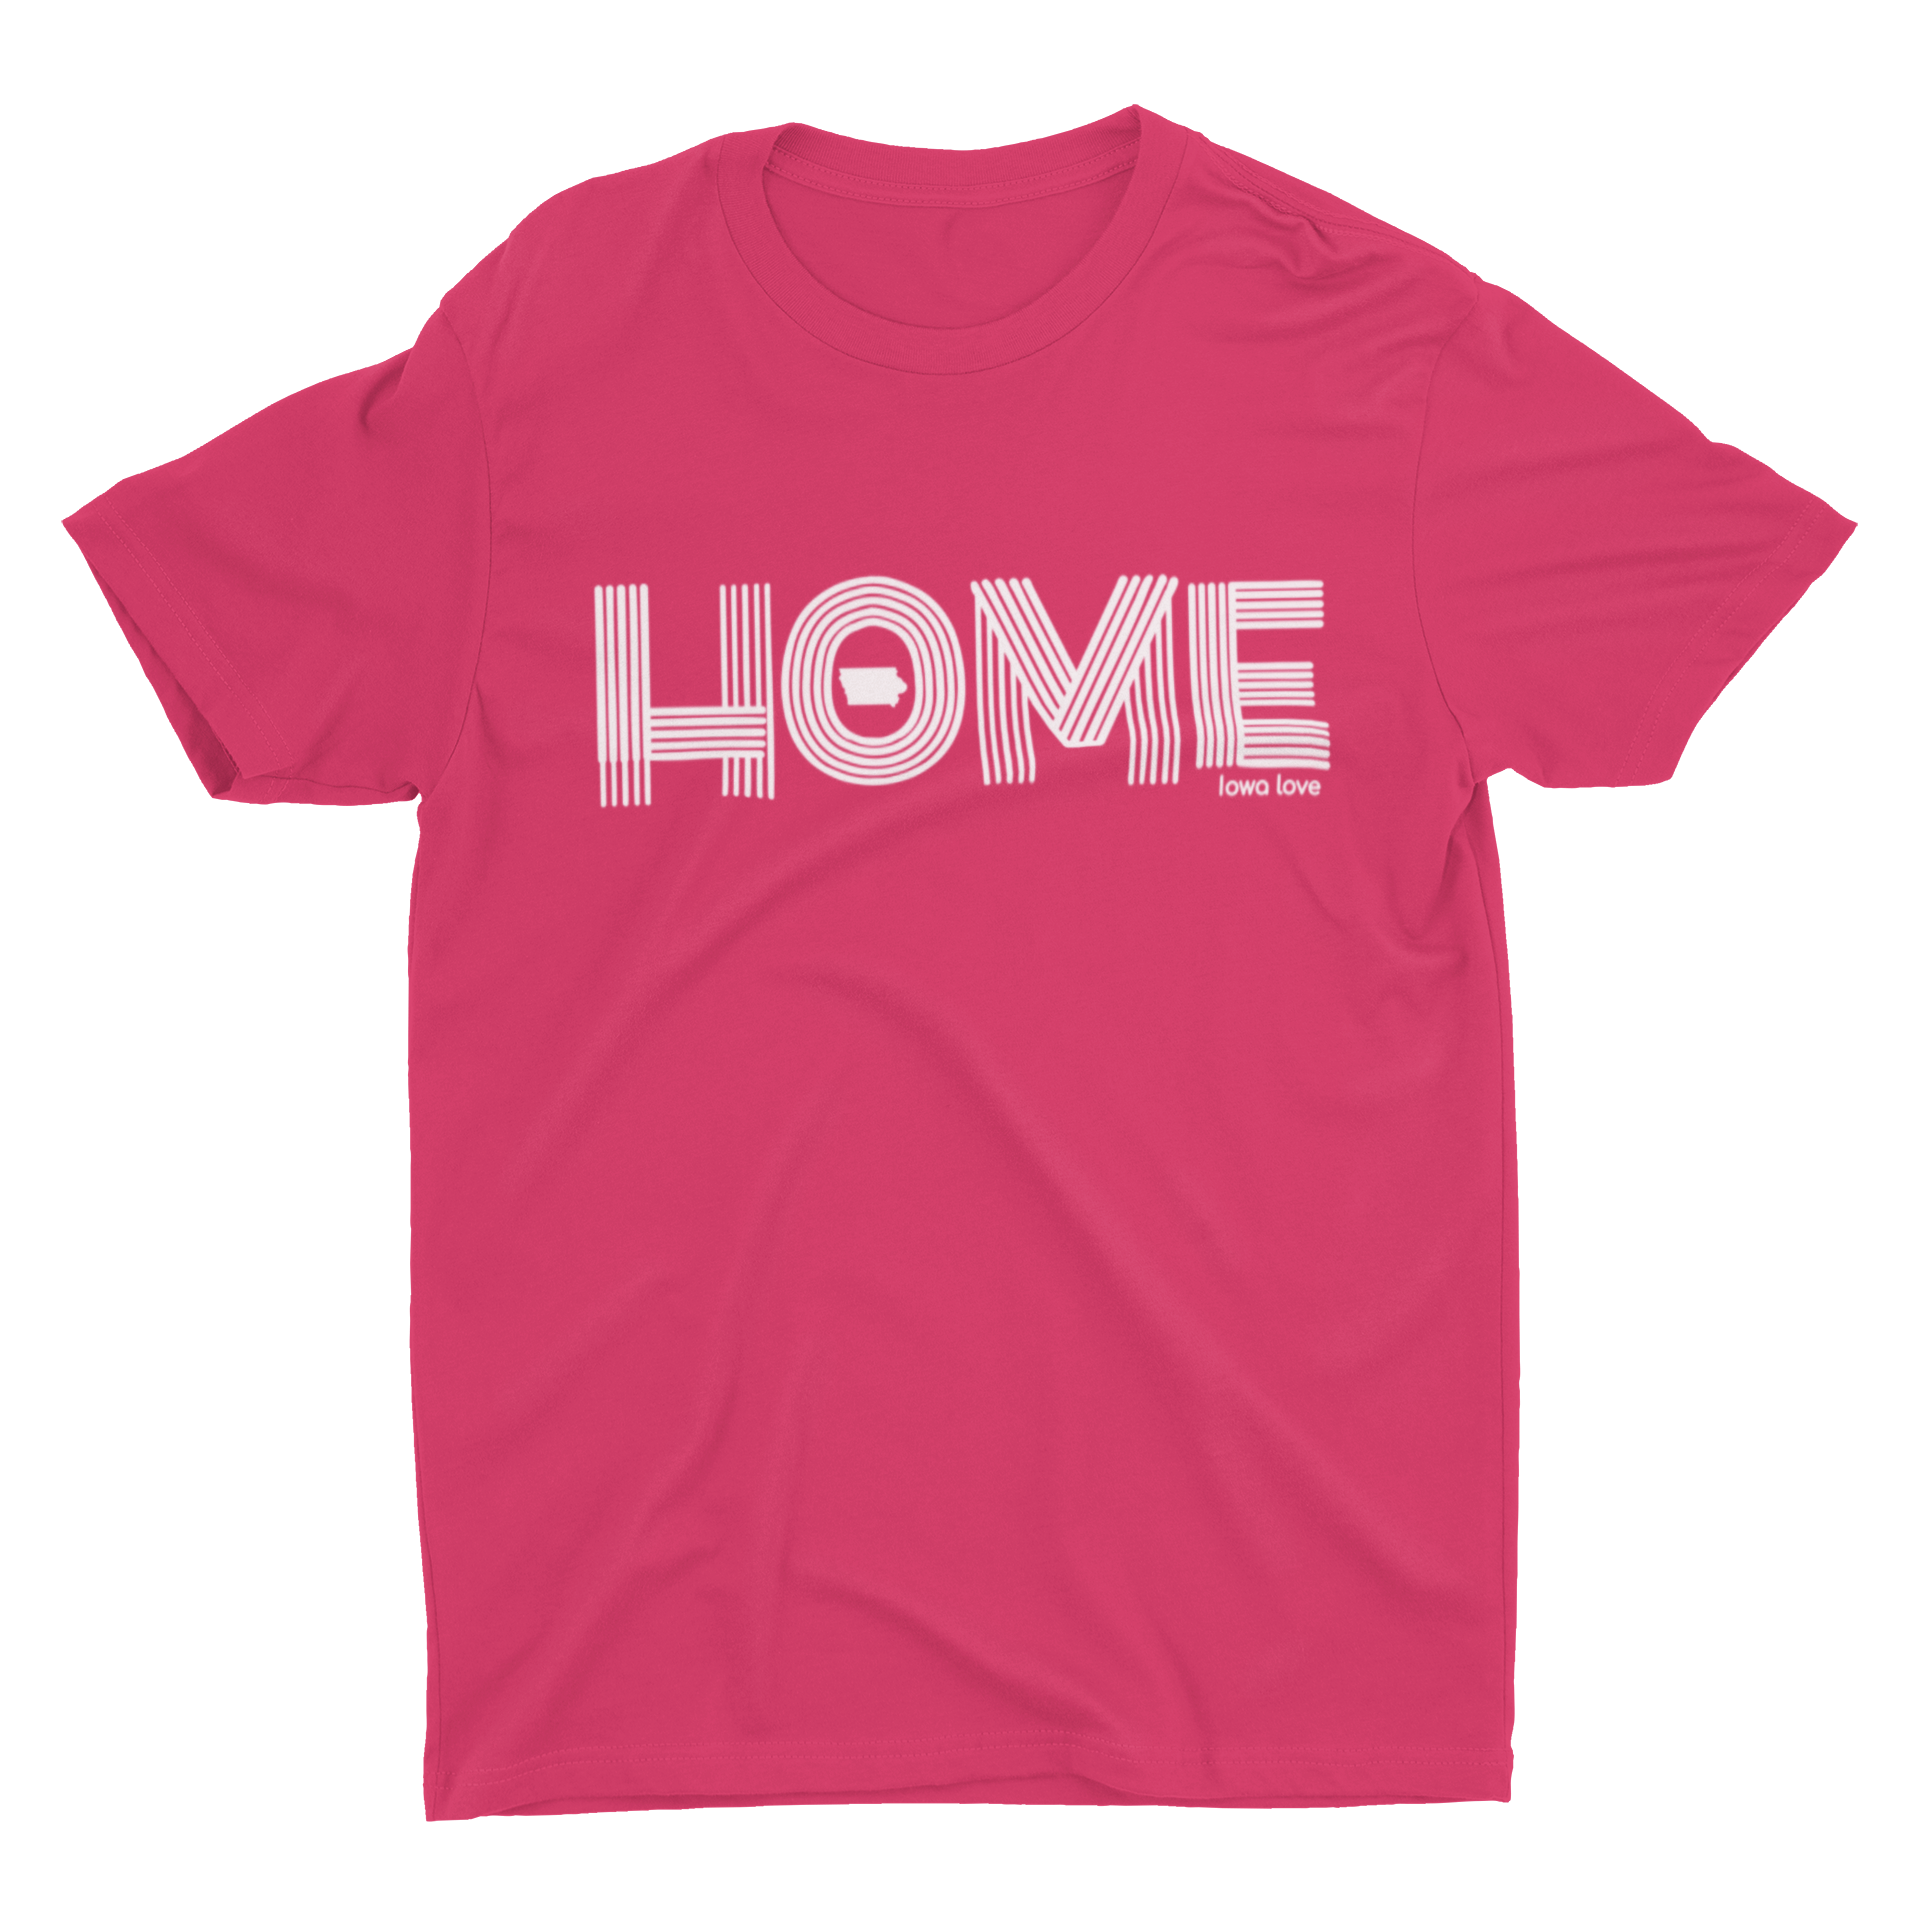 "HOME LOVE" Iowa T-Shirt